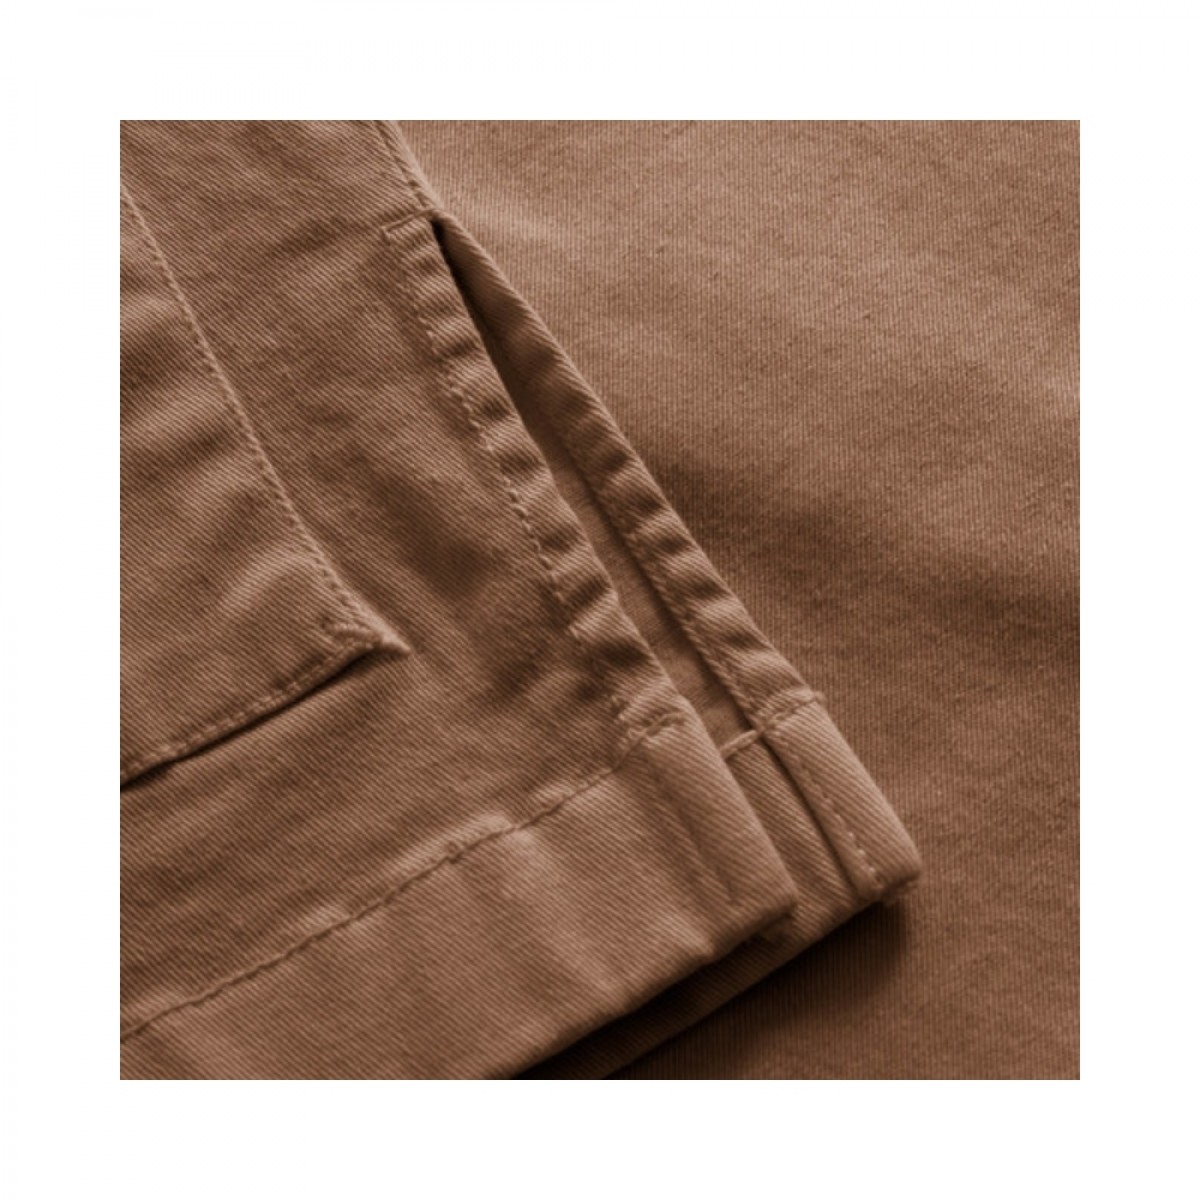 cameron gmtd jacket - deep brown - slids